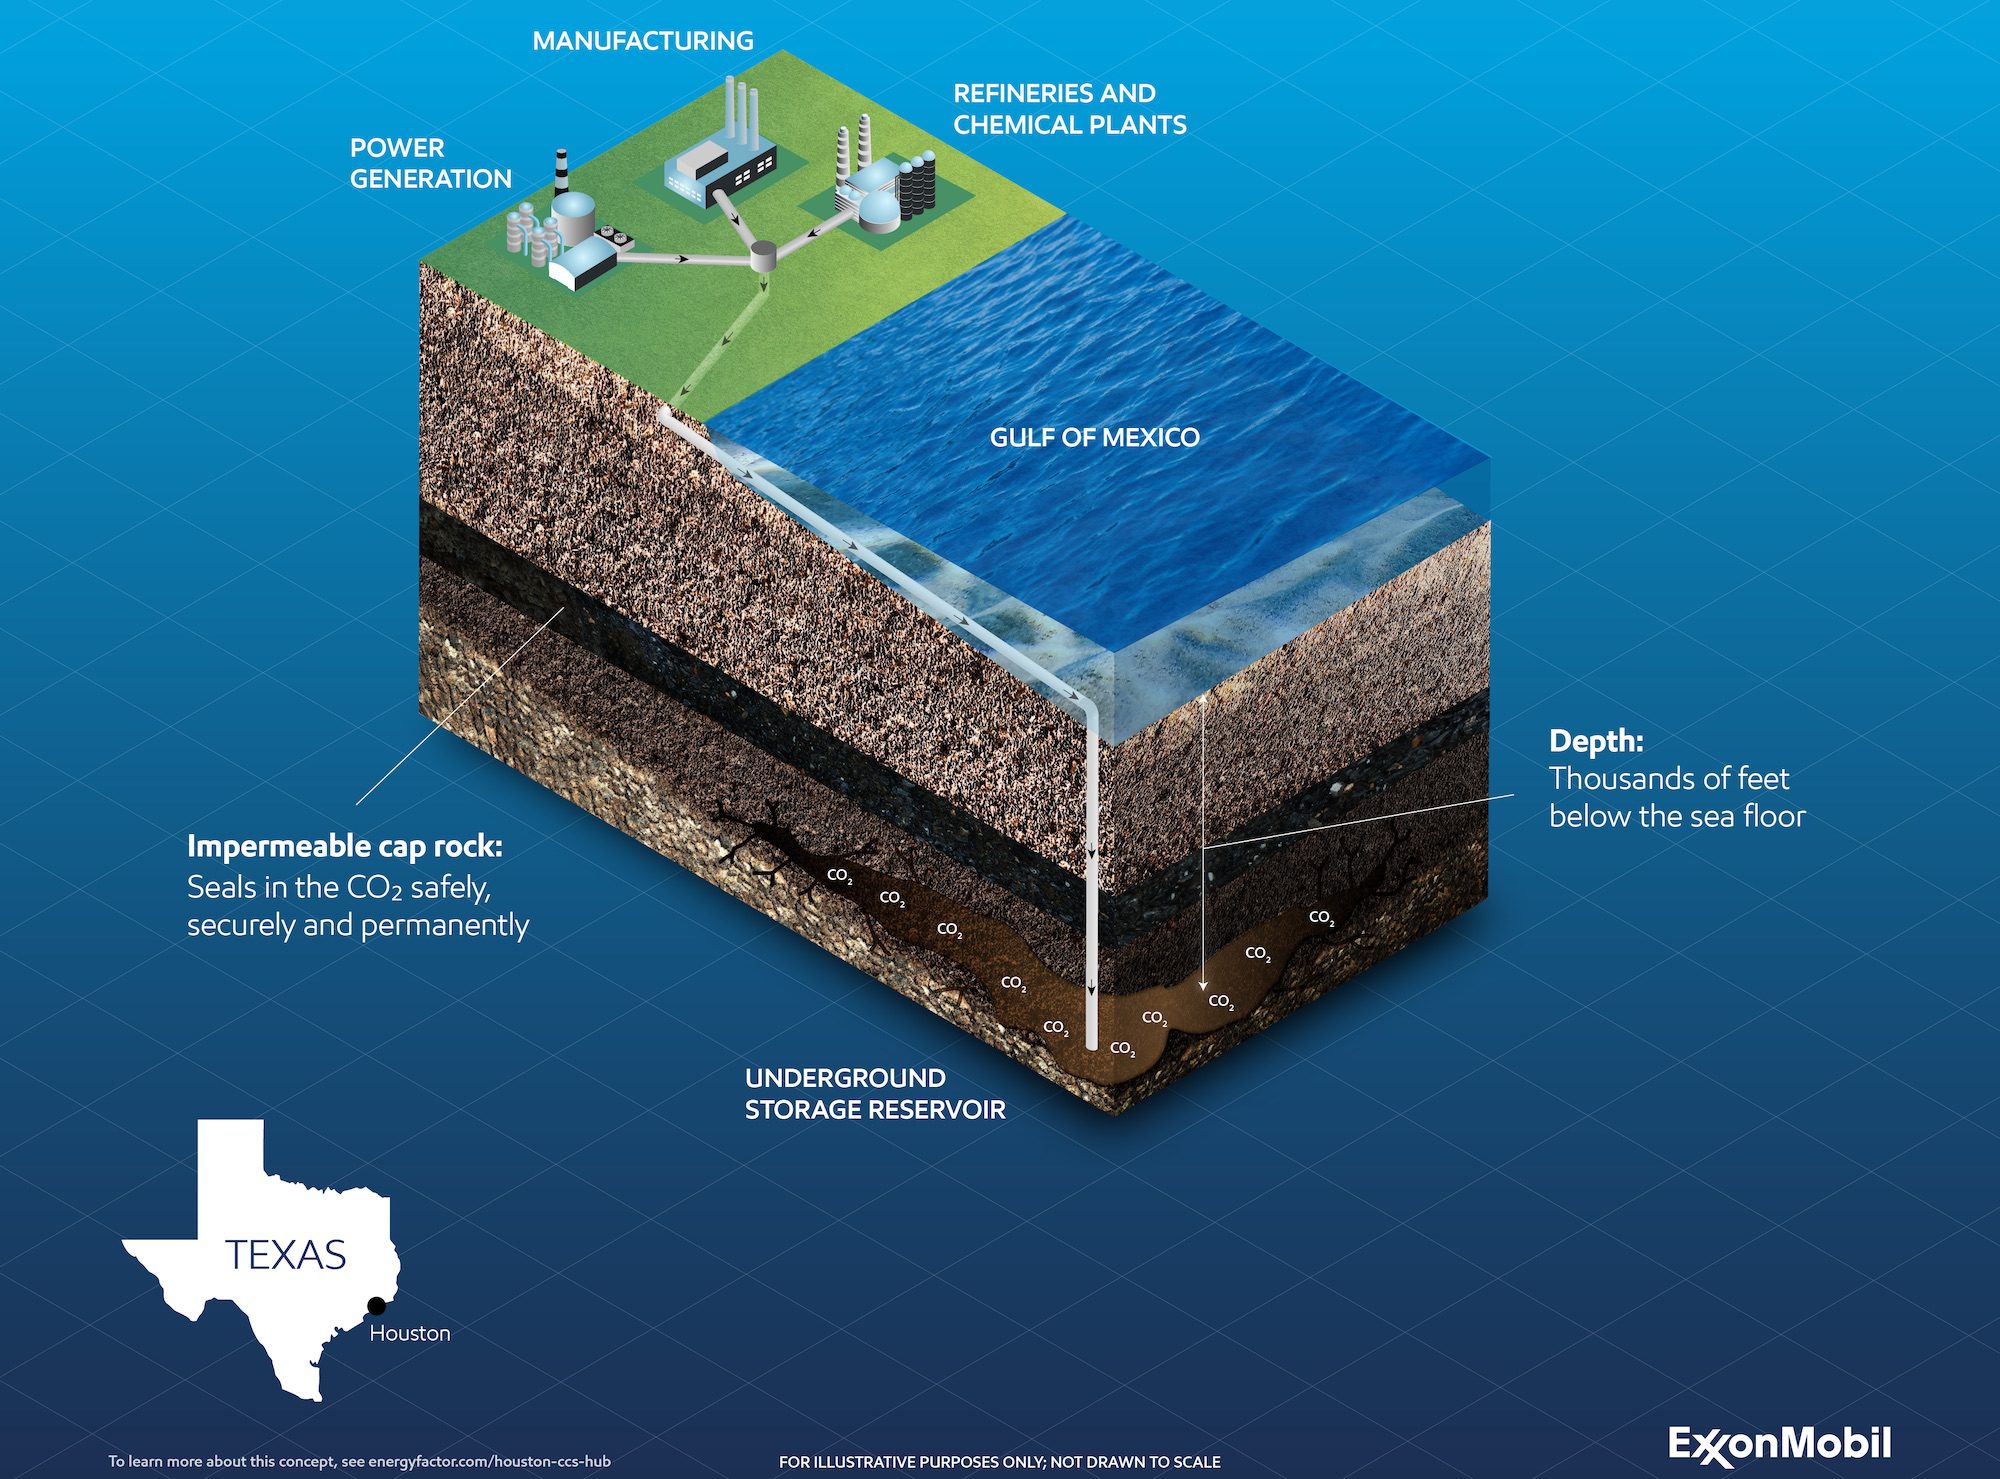 Exxon Mobil carbon capture and storage illustration. Image courtesy Exxon Mobil